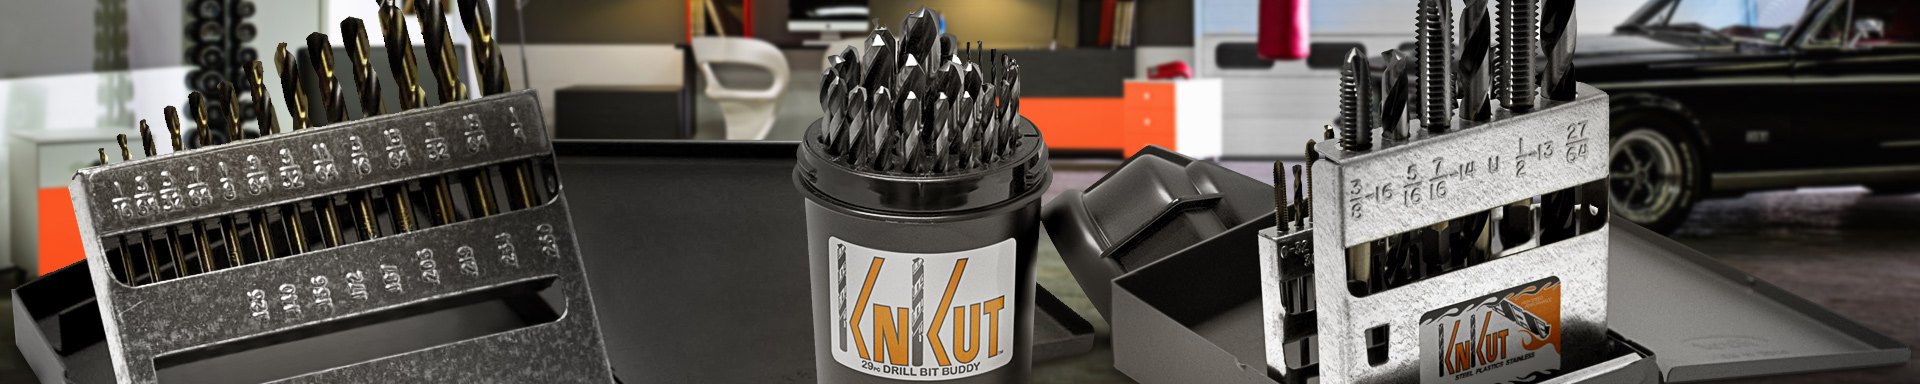 KnKut Drill Bit Sets